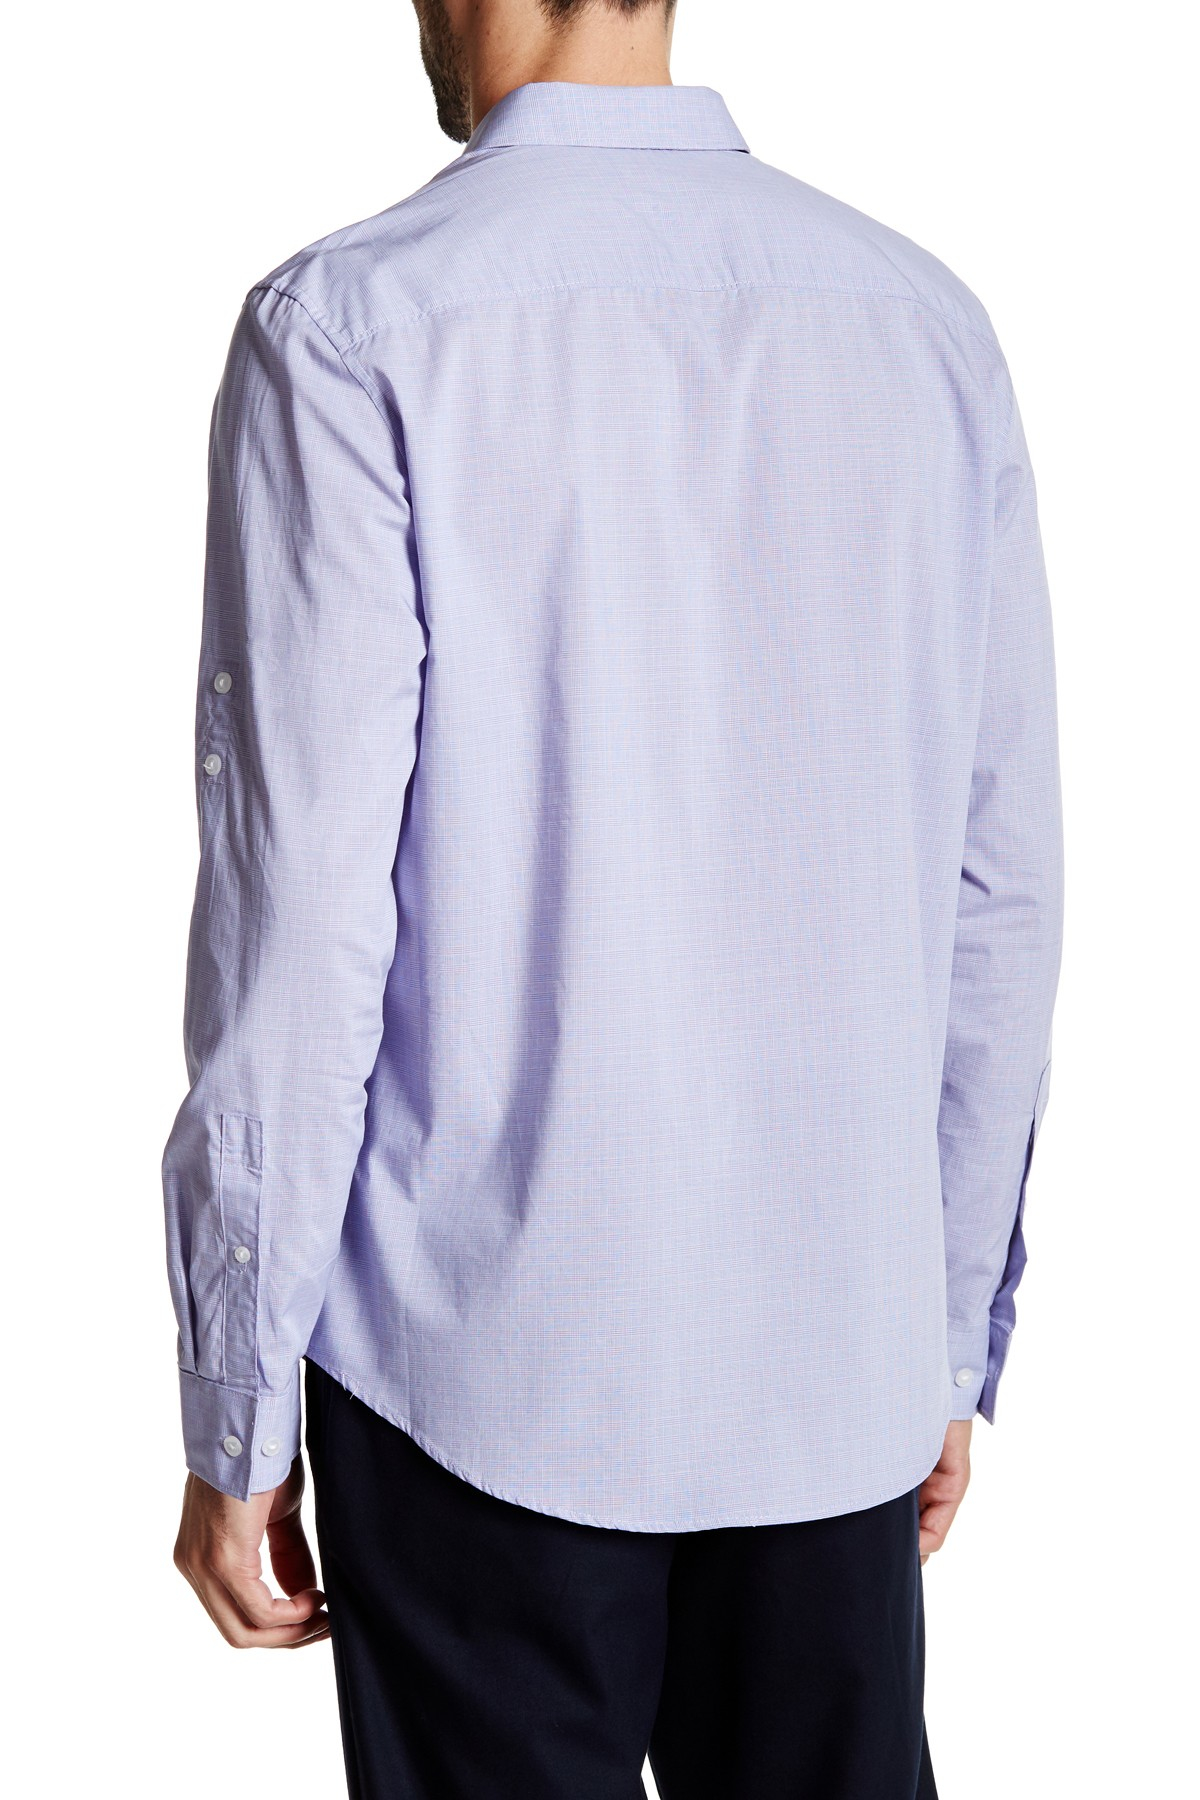 Calvin Klein Cotton Regular Fit Plaid Long Sleeve Shirt for Men - Lyst